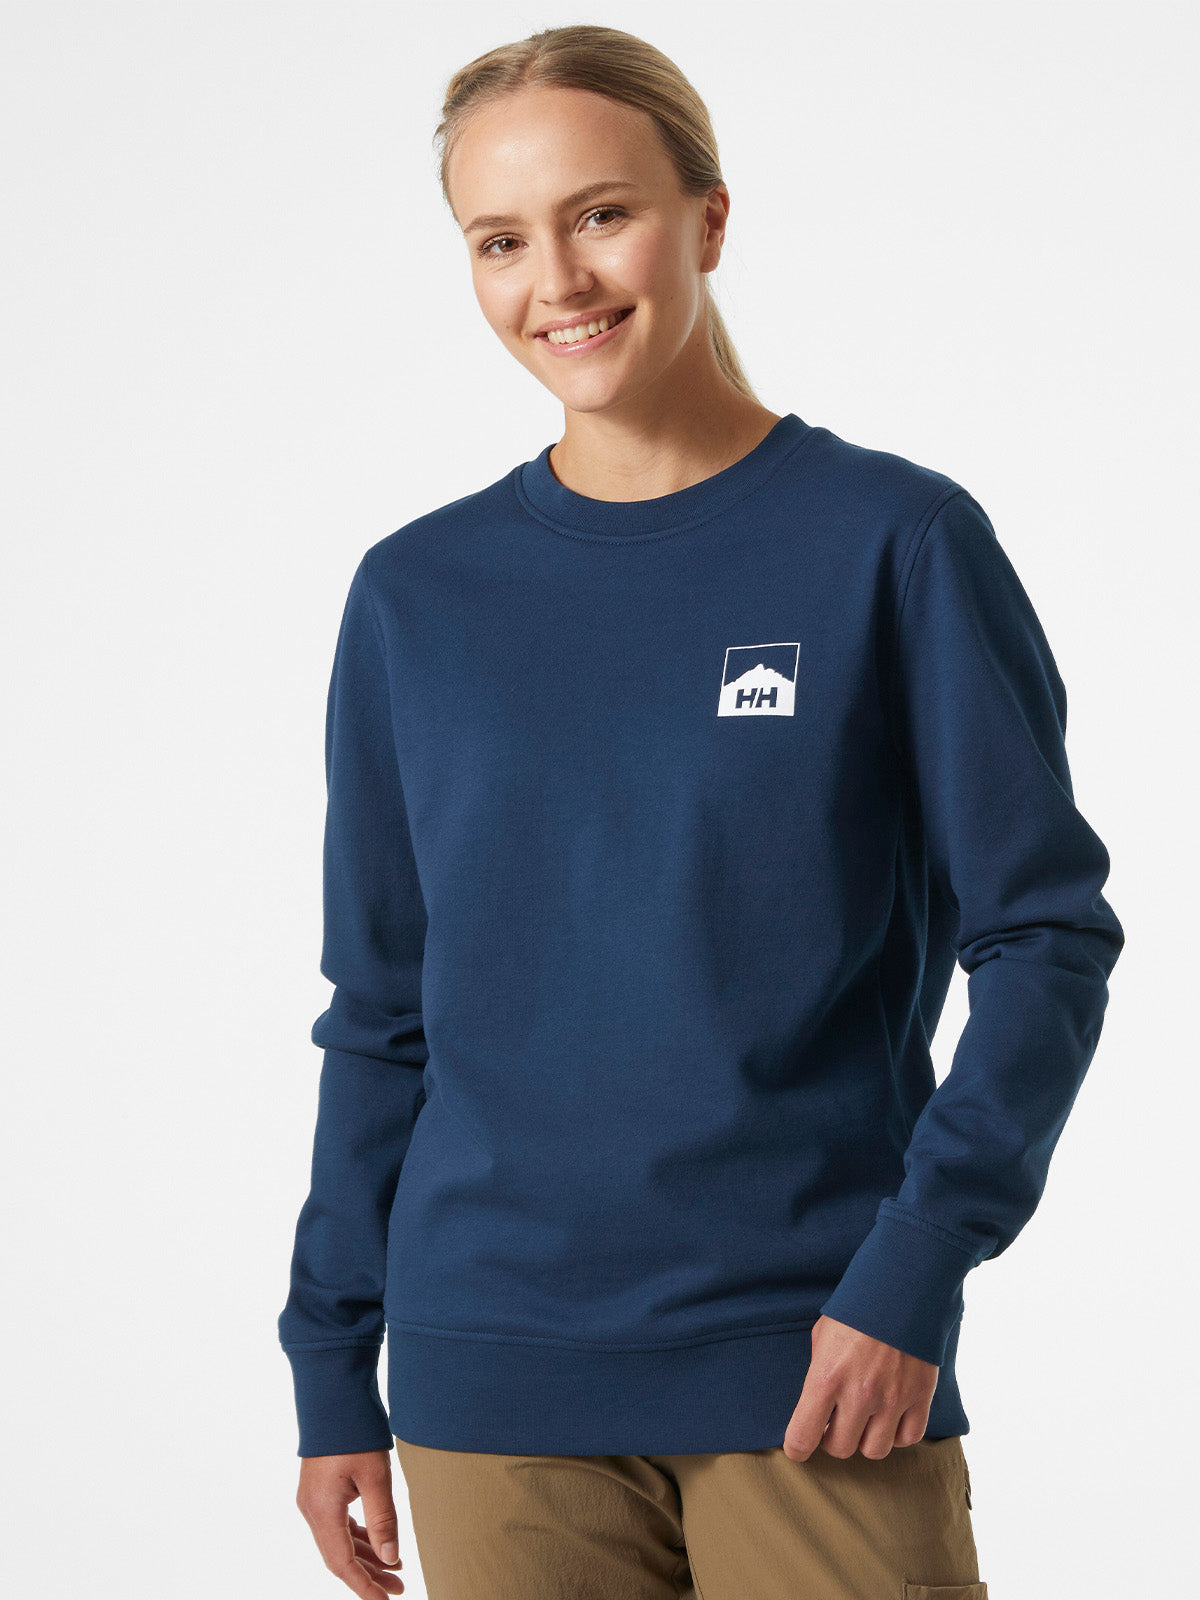 Nord Graphic Sweatshirt for Women